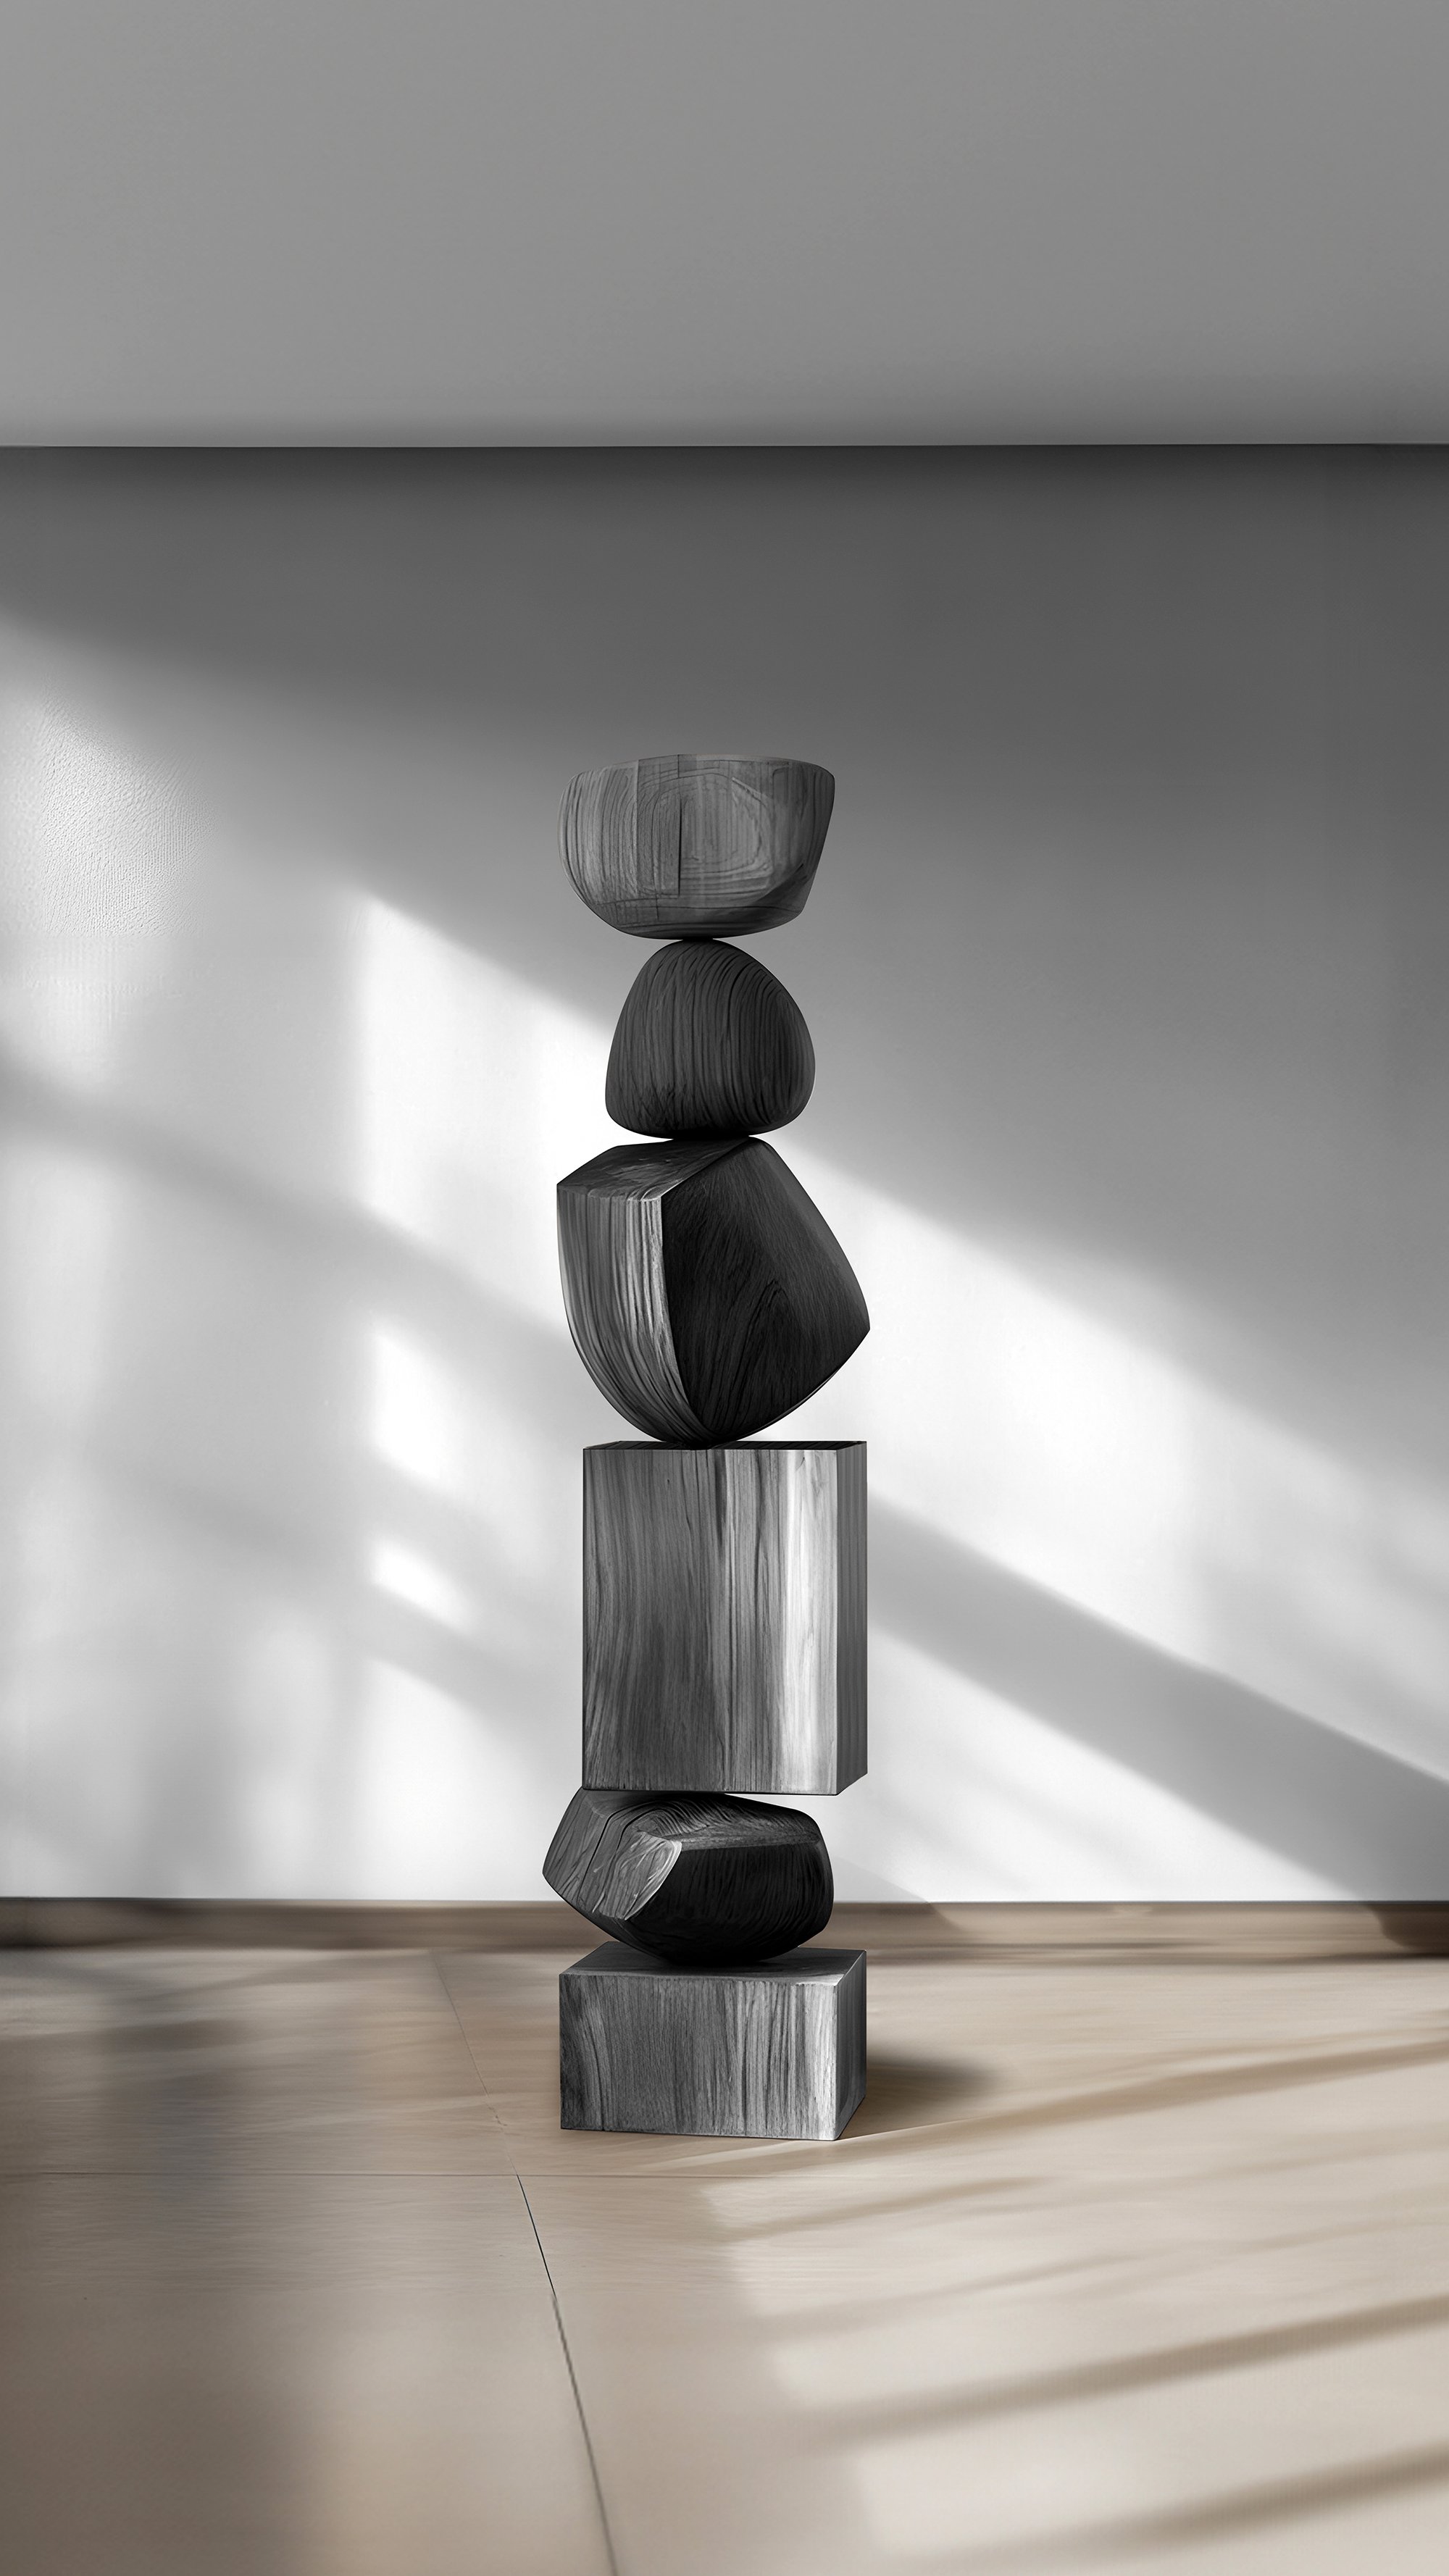 Design of Sleek Darkness, Modern Black Solid Wood Totem by NONO, Still Stand No101 -4.jpg